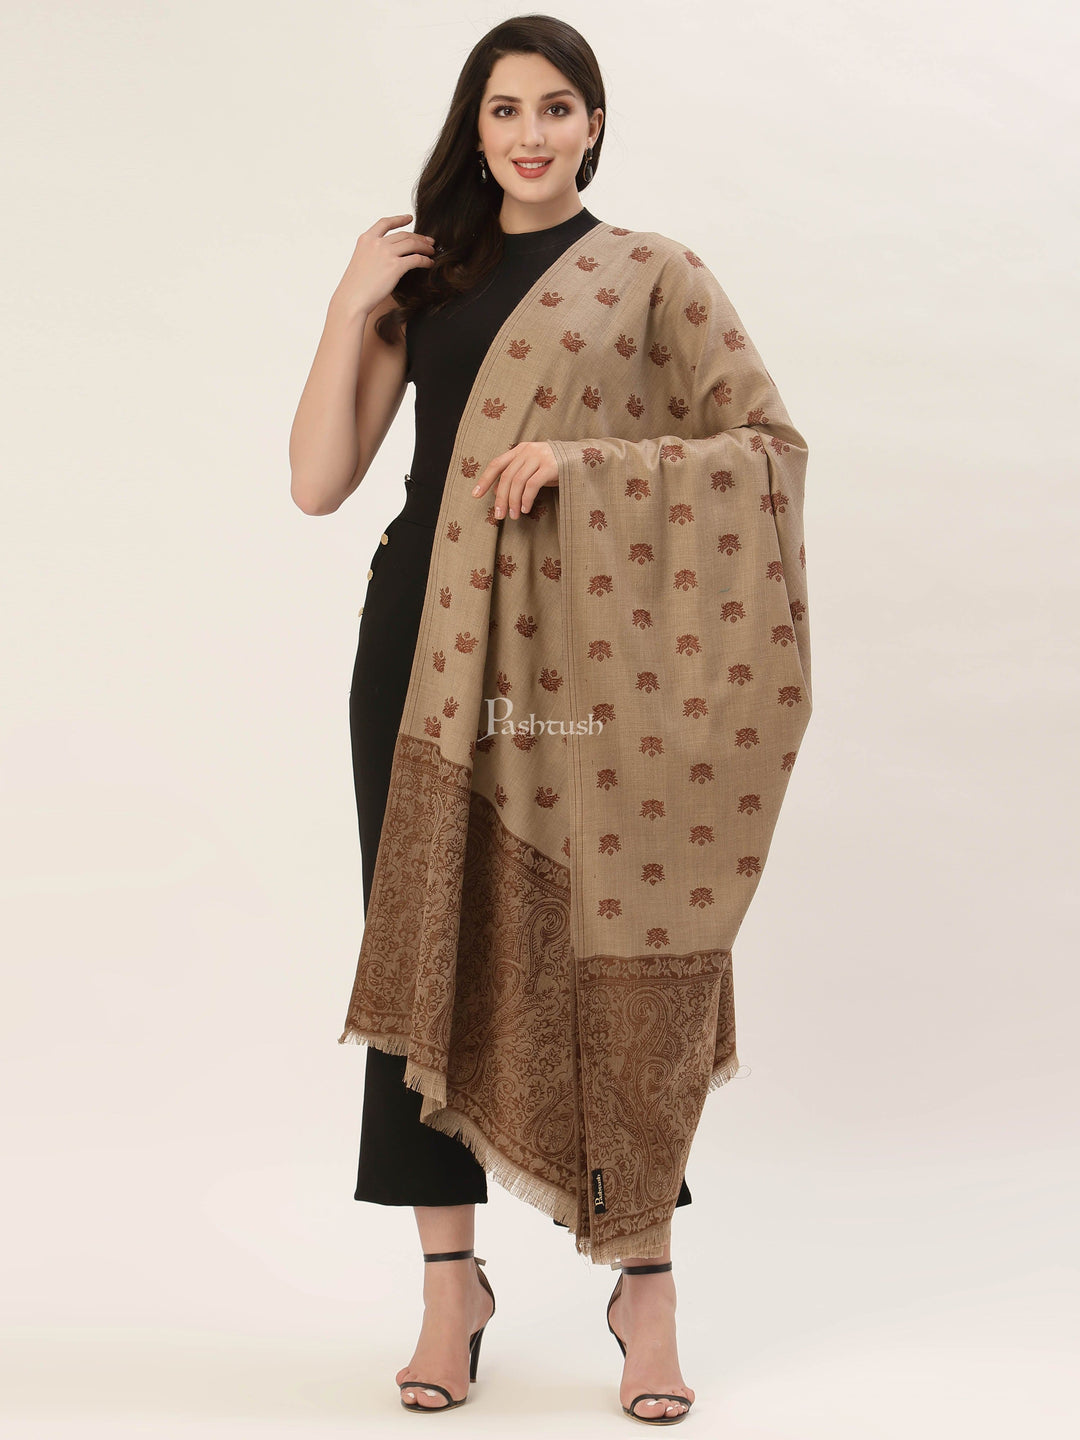 Pashtush India Womens Shawls Pashtush Womens Embroidery Shawl, Jaal Design, Fine Wool, Beige and Emerald brown